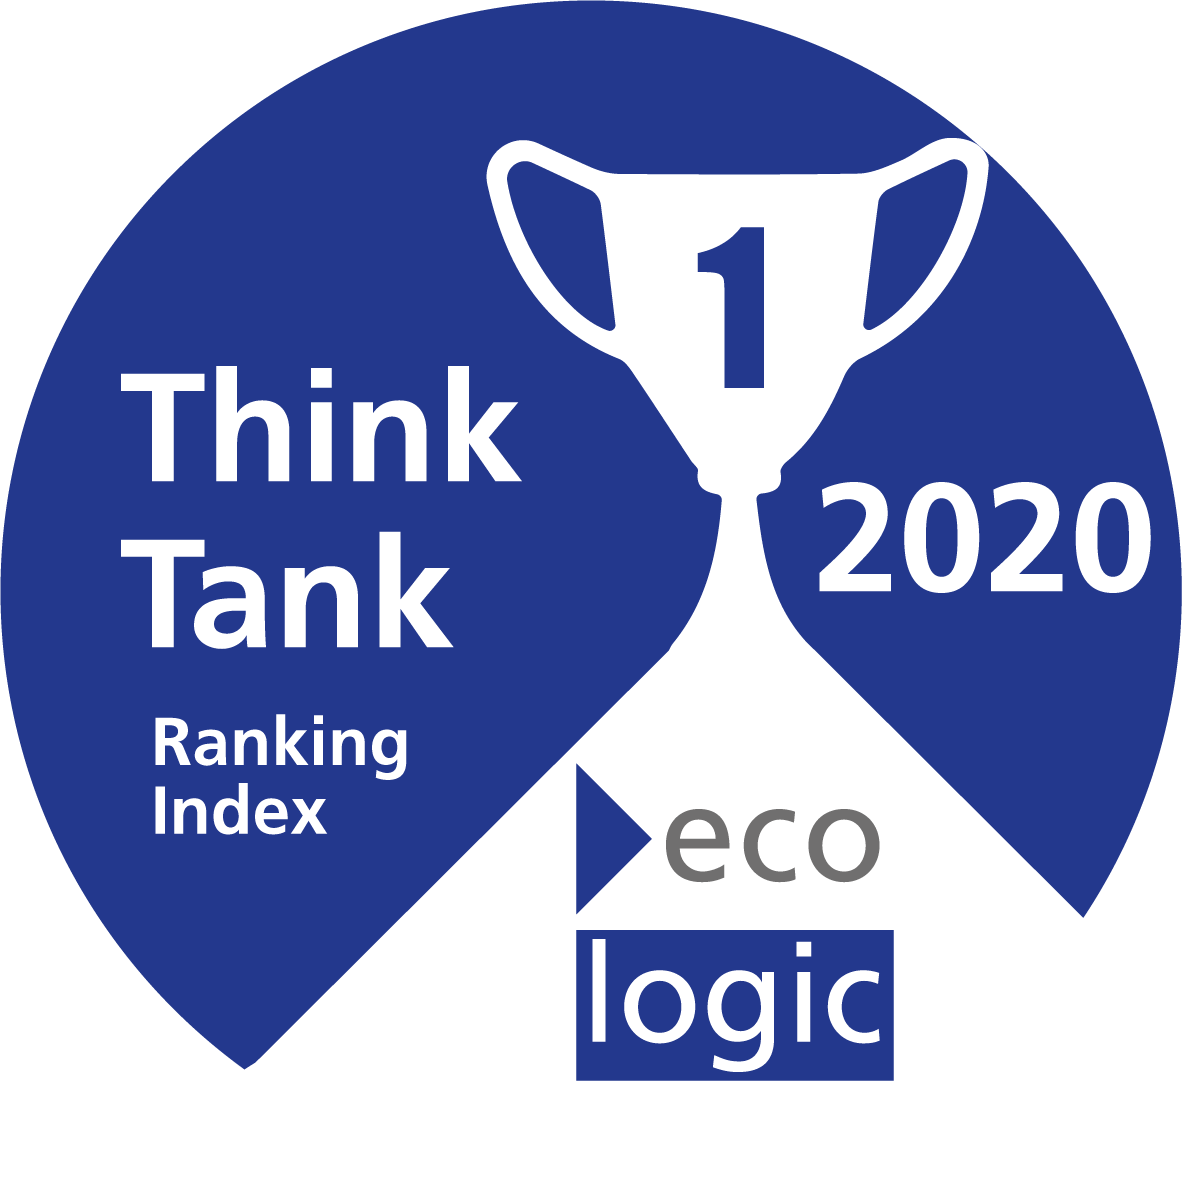 Ecologic Institute #1 Environmental Think Tank in 2020 Ranking